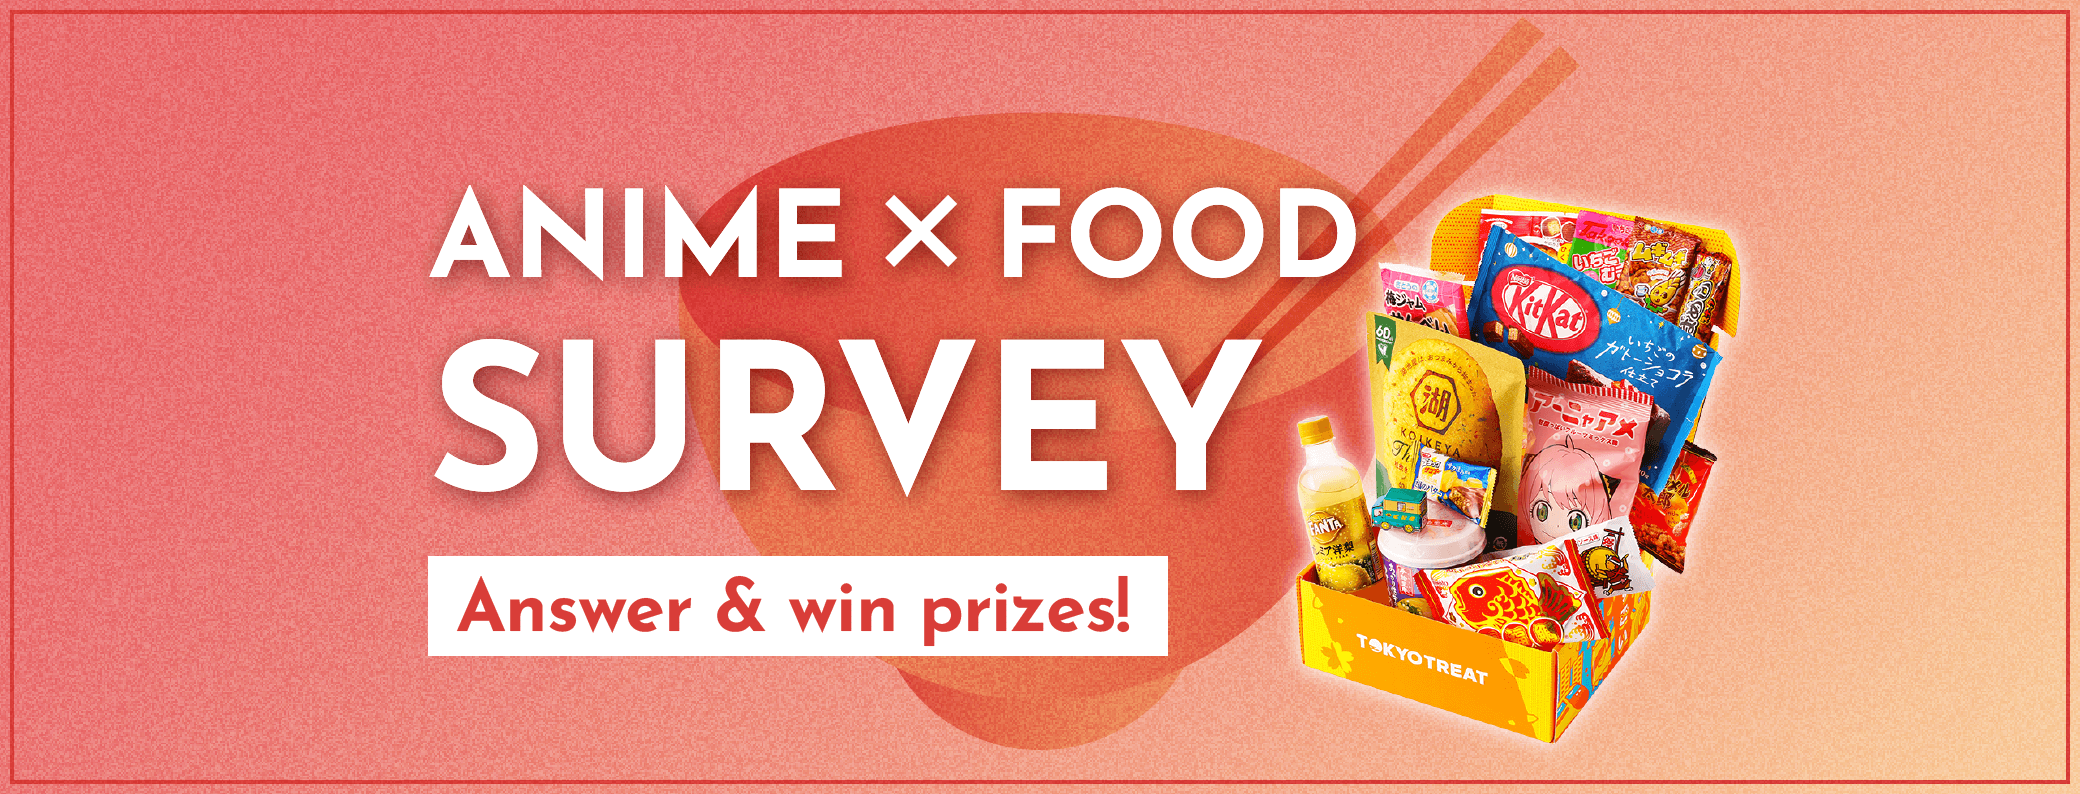 Anime x Food Survey - Answer & win prizes!